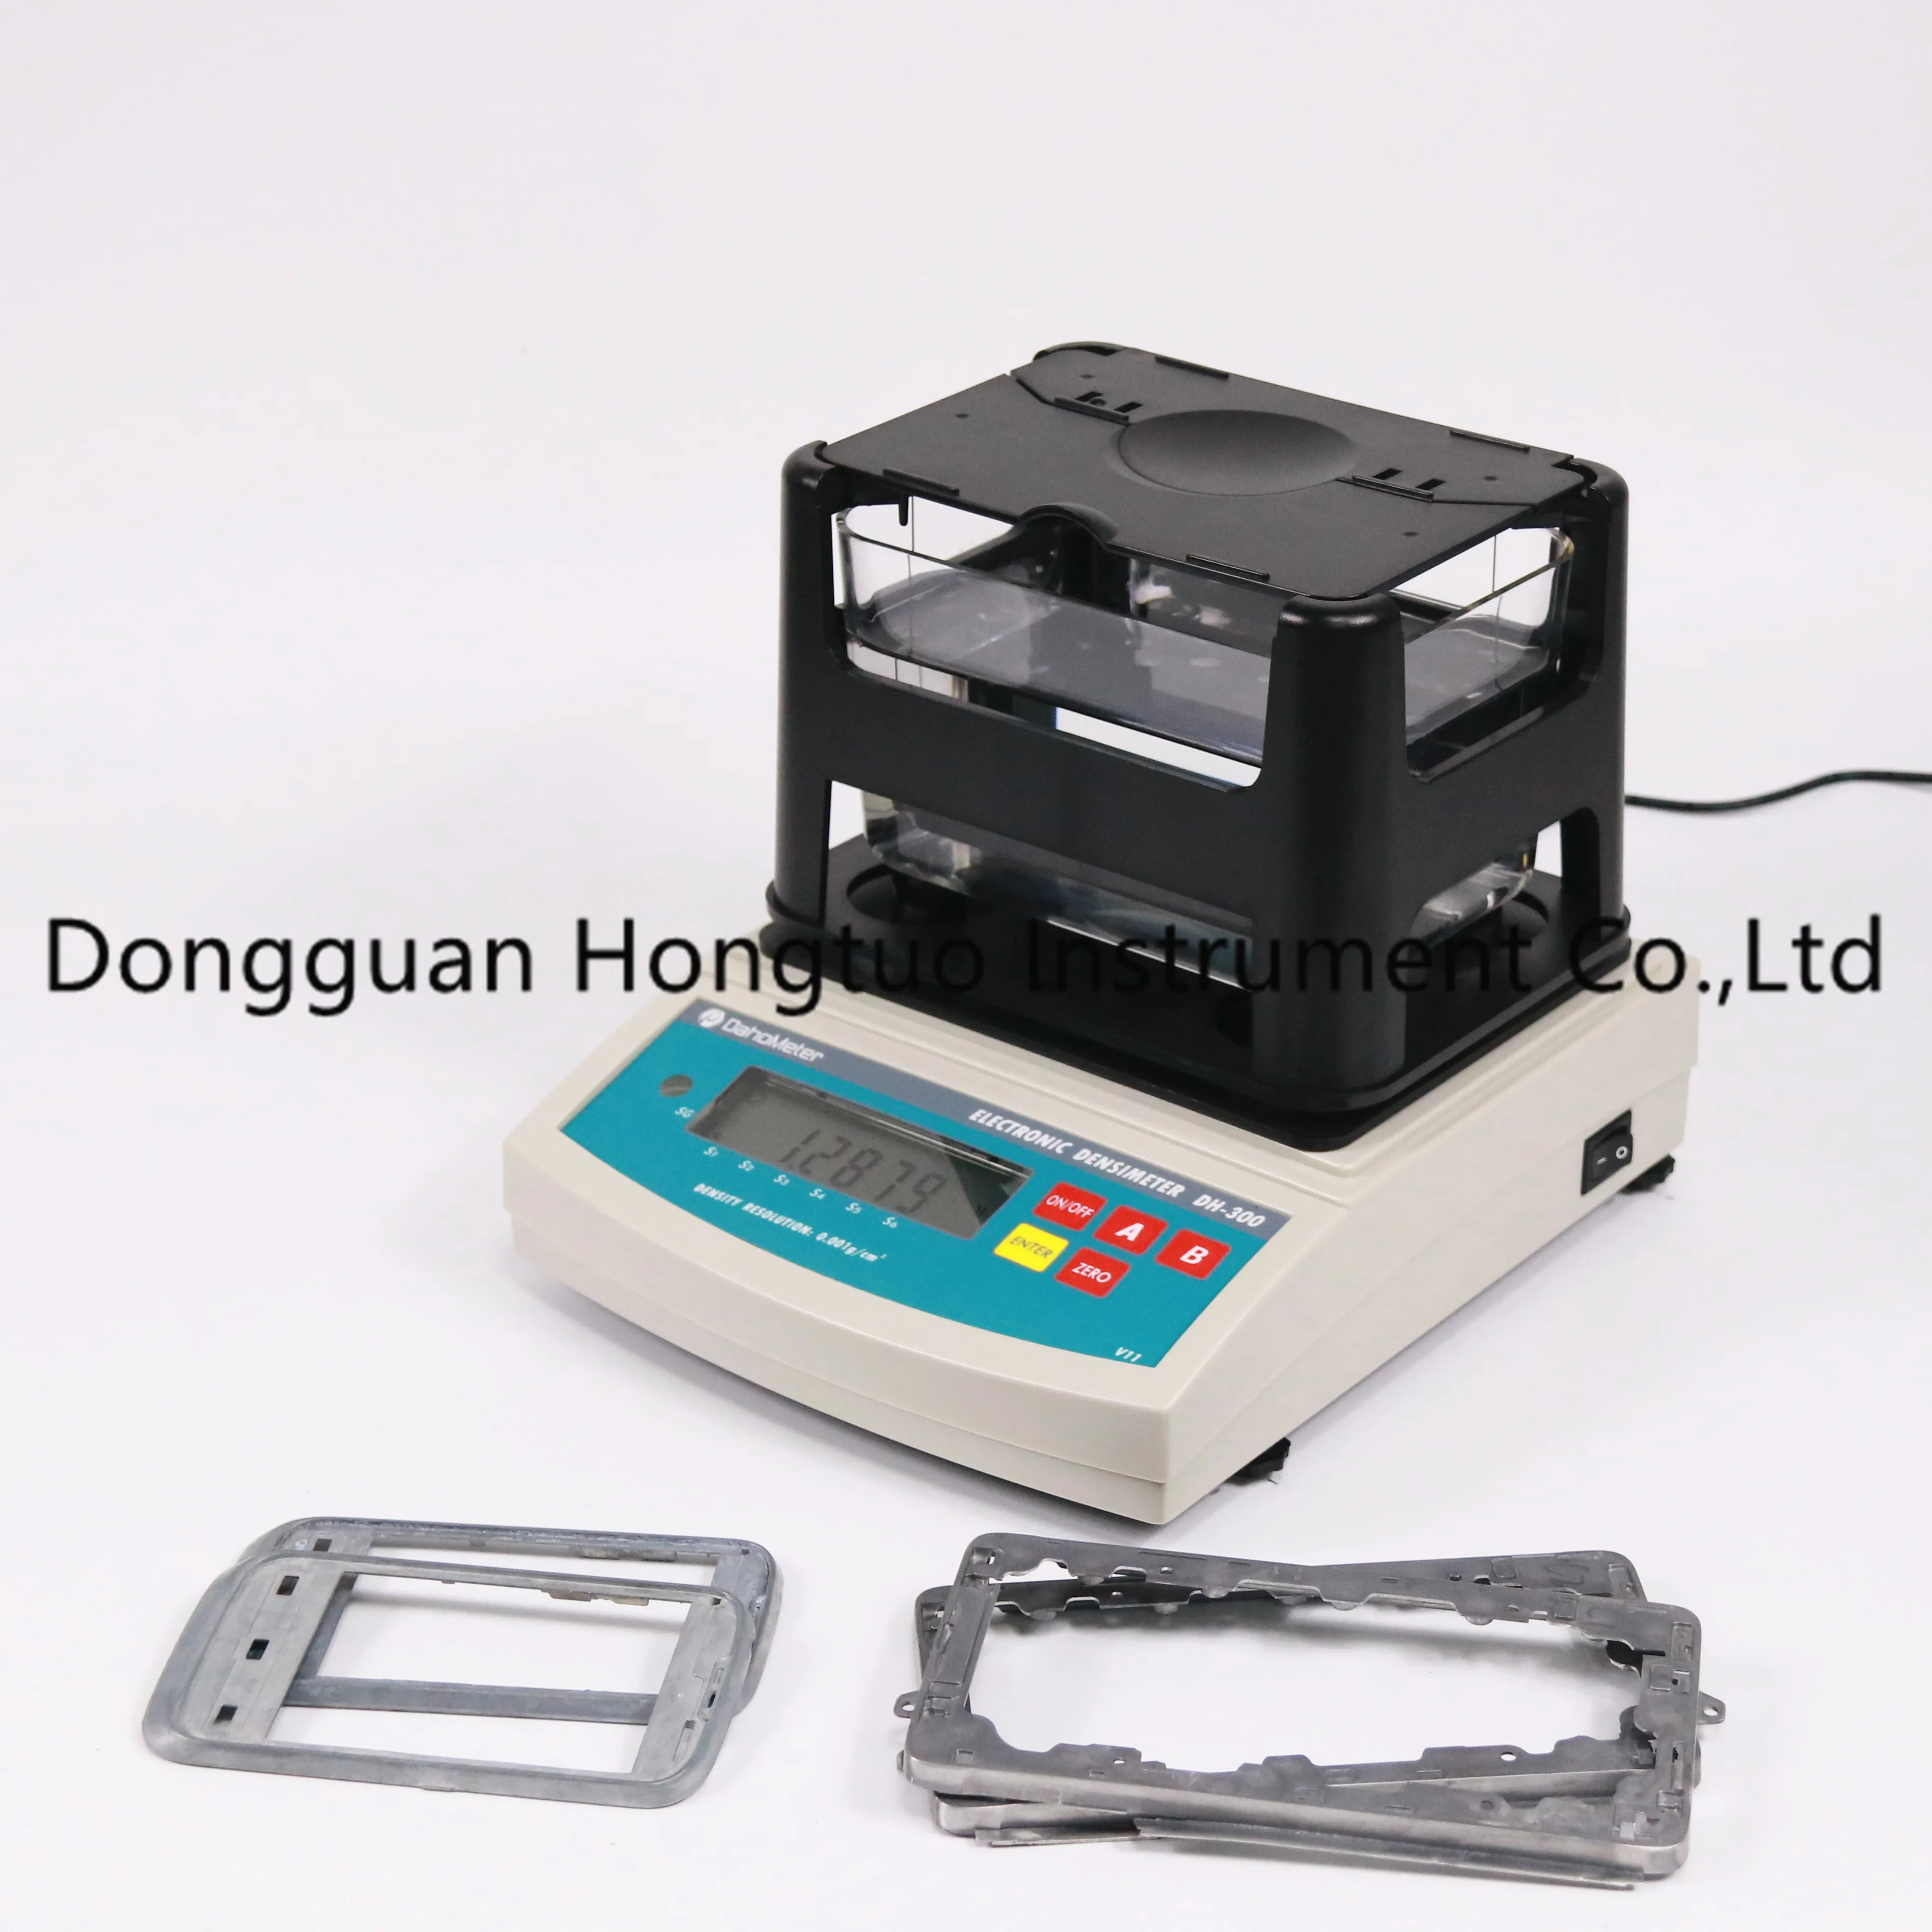 DH-600 China Factory Censitometer Price ، أدوات لقياس كثافة الخرسانة والتربة والبيتومين والاسفلت عن طريق الشحن المجاني